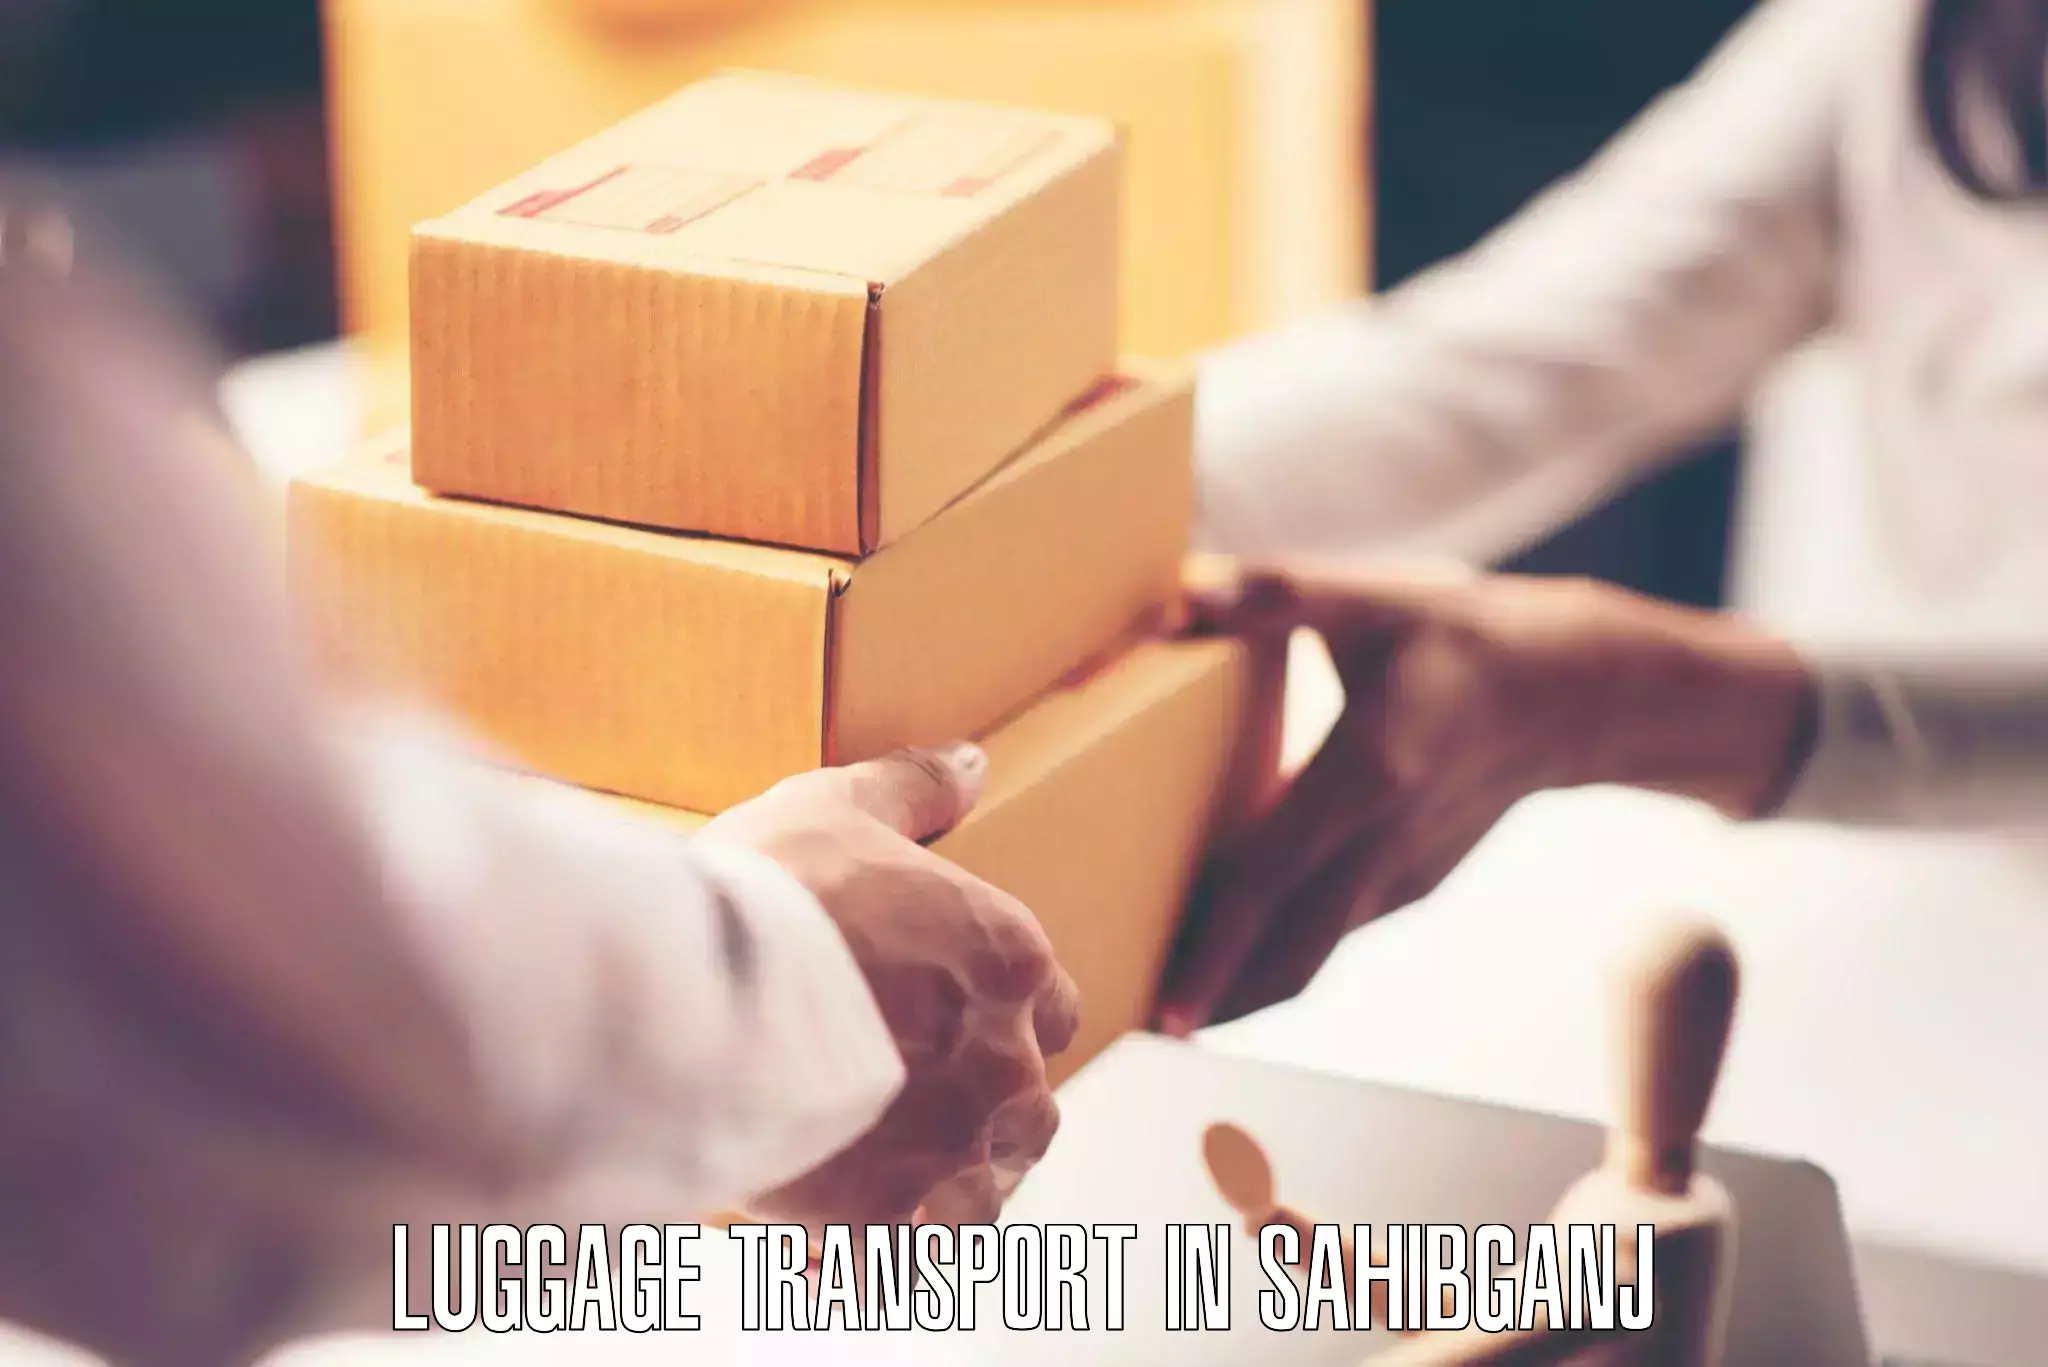 Luggage transport operations in Sahibganj